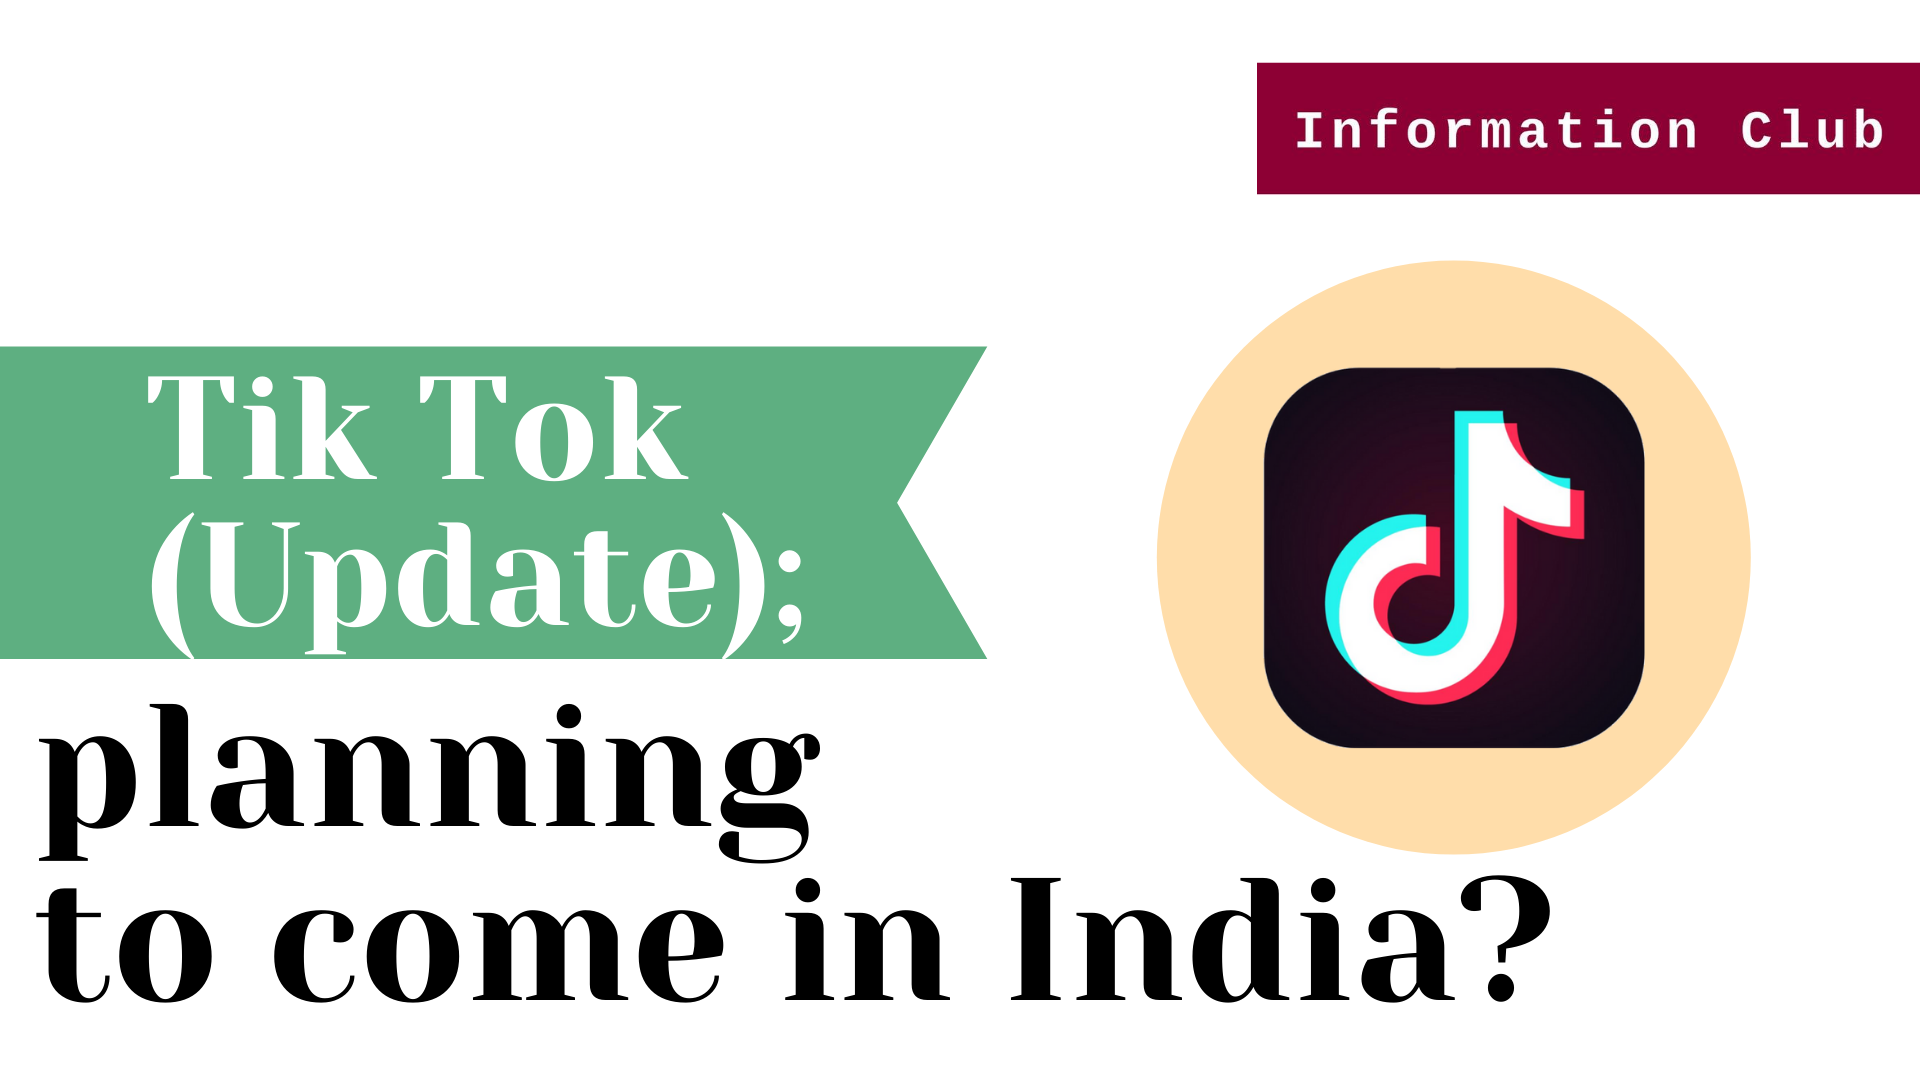 http://www.clubinfonline.com/2020/09/02/ tik-tok-updates-planning-to-come-in-india / ‎